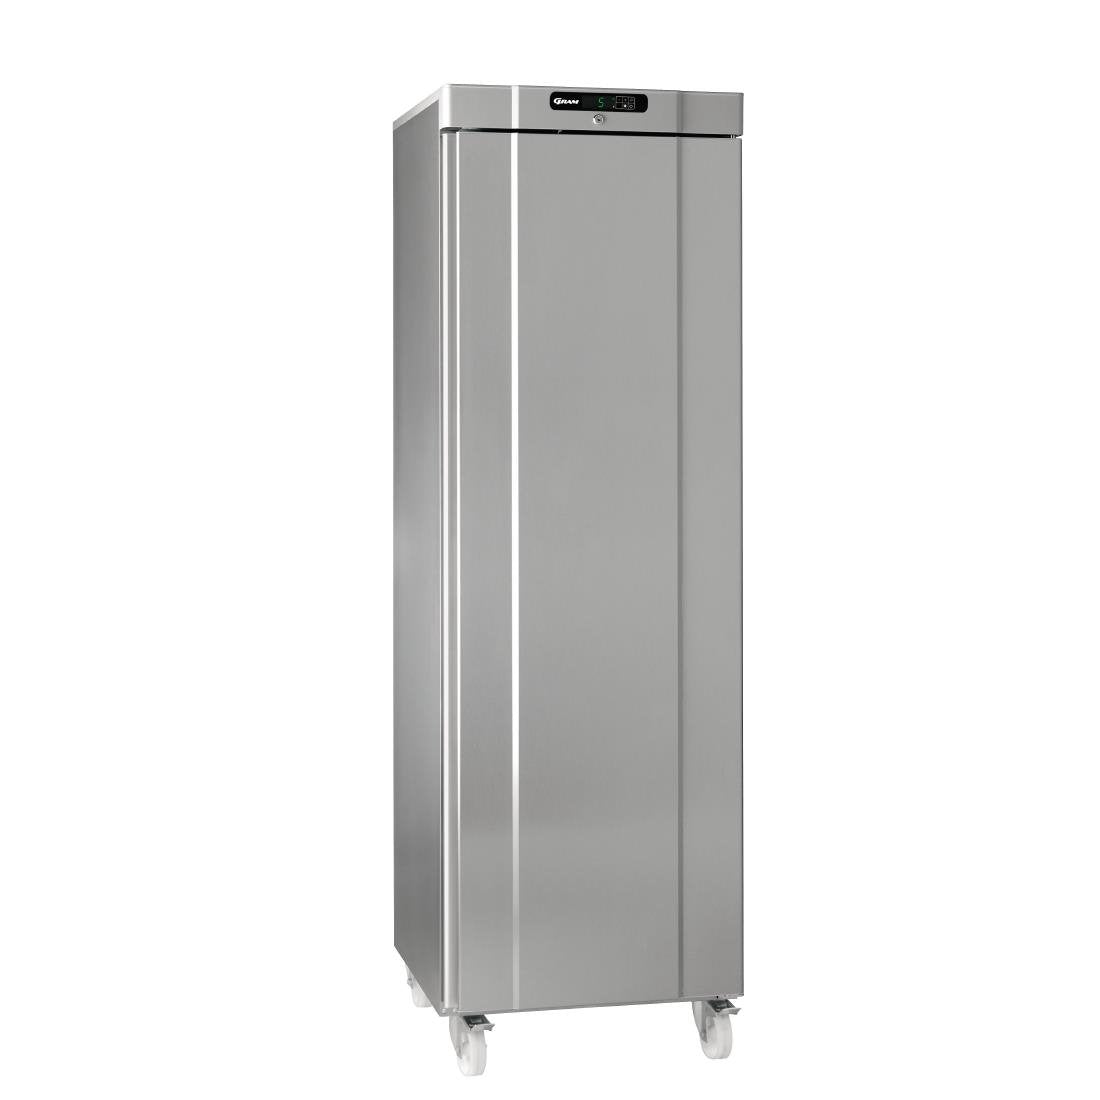 Gram Compact 1 Door 346Ltr Cabinet Fridge K410 RG C 6N JD Catering Equipment Solutions Ltd